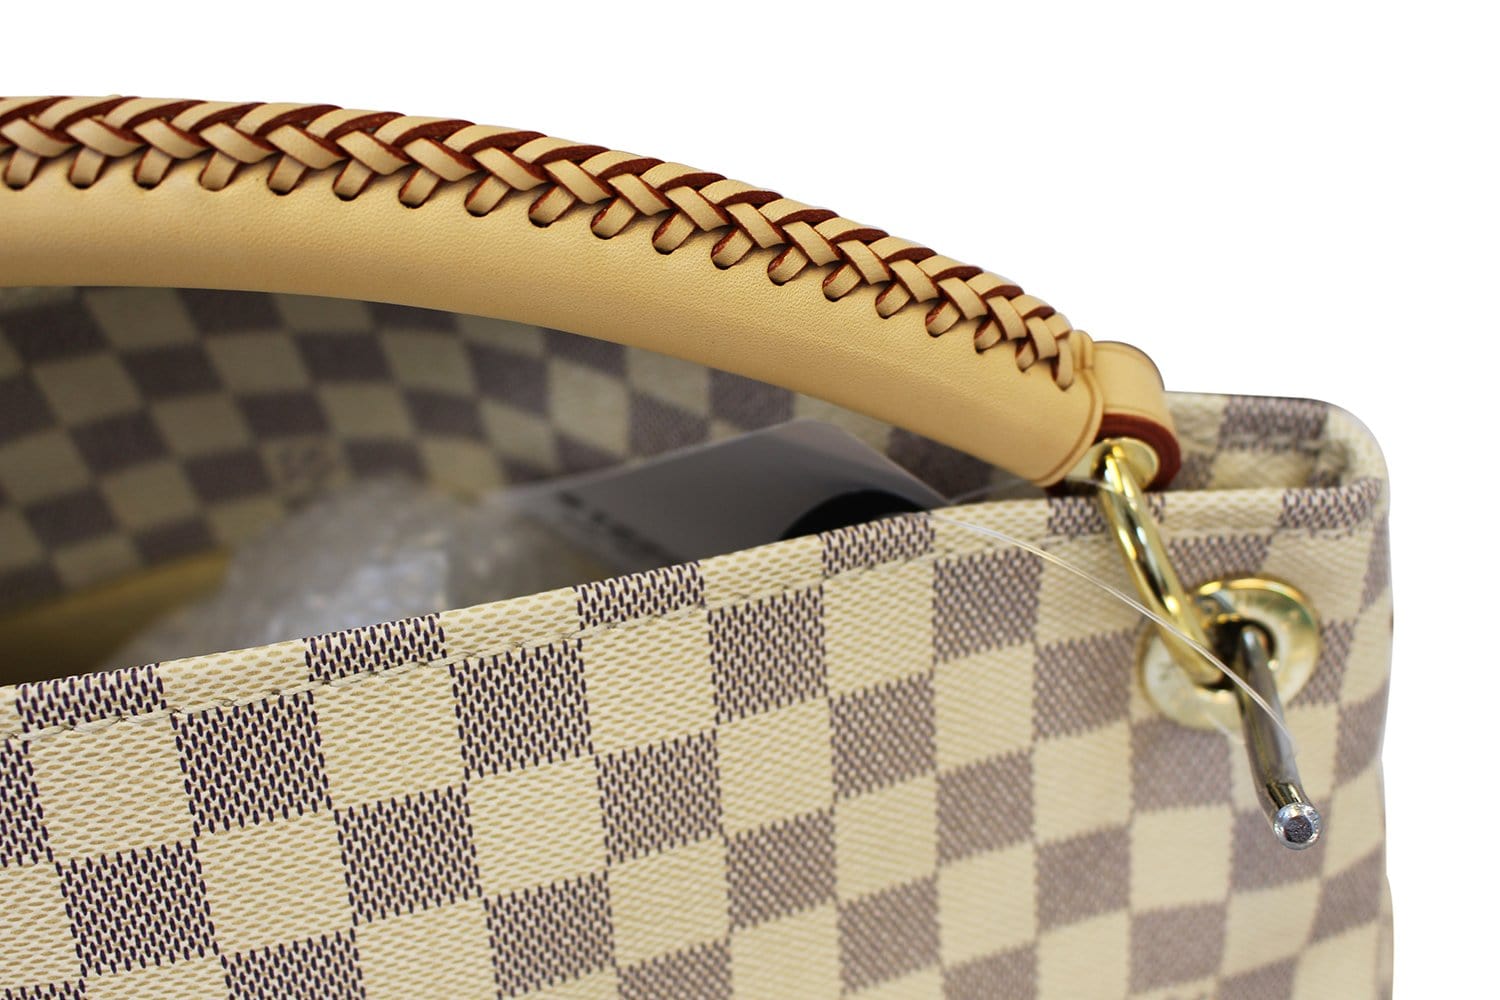 Louis Vuitton Artsy MM Damier Azur Shoulder Handbag